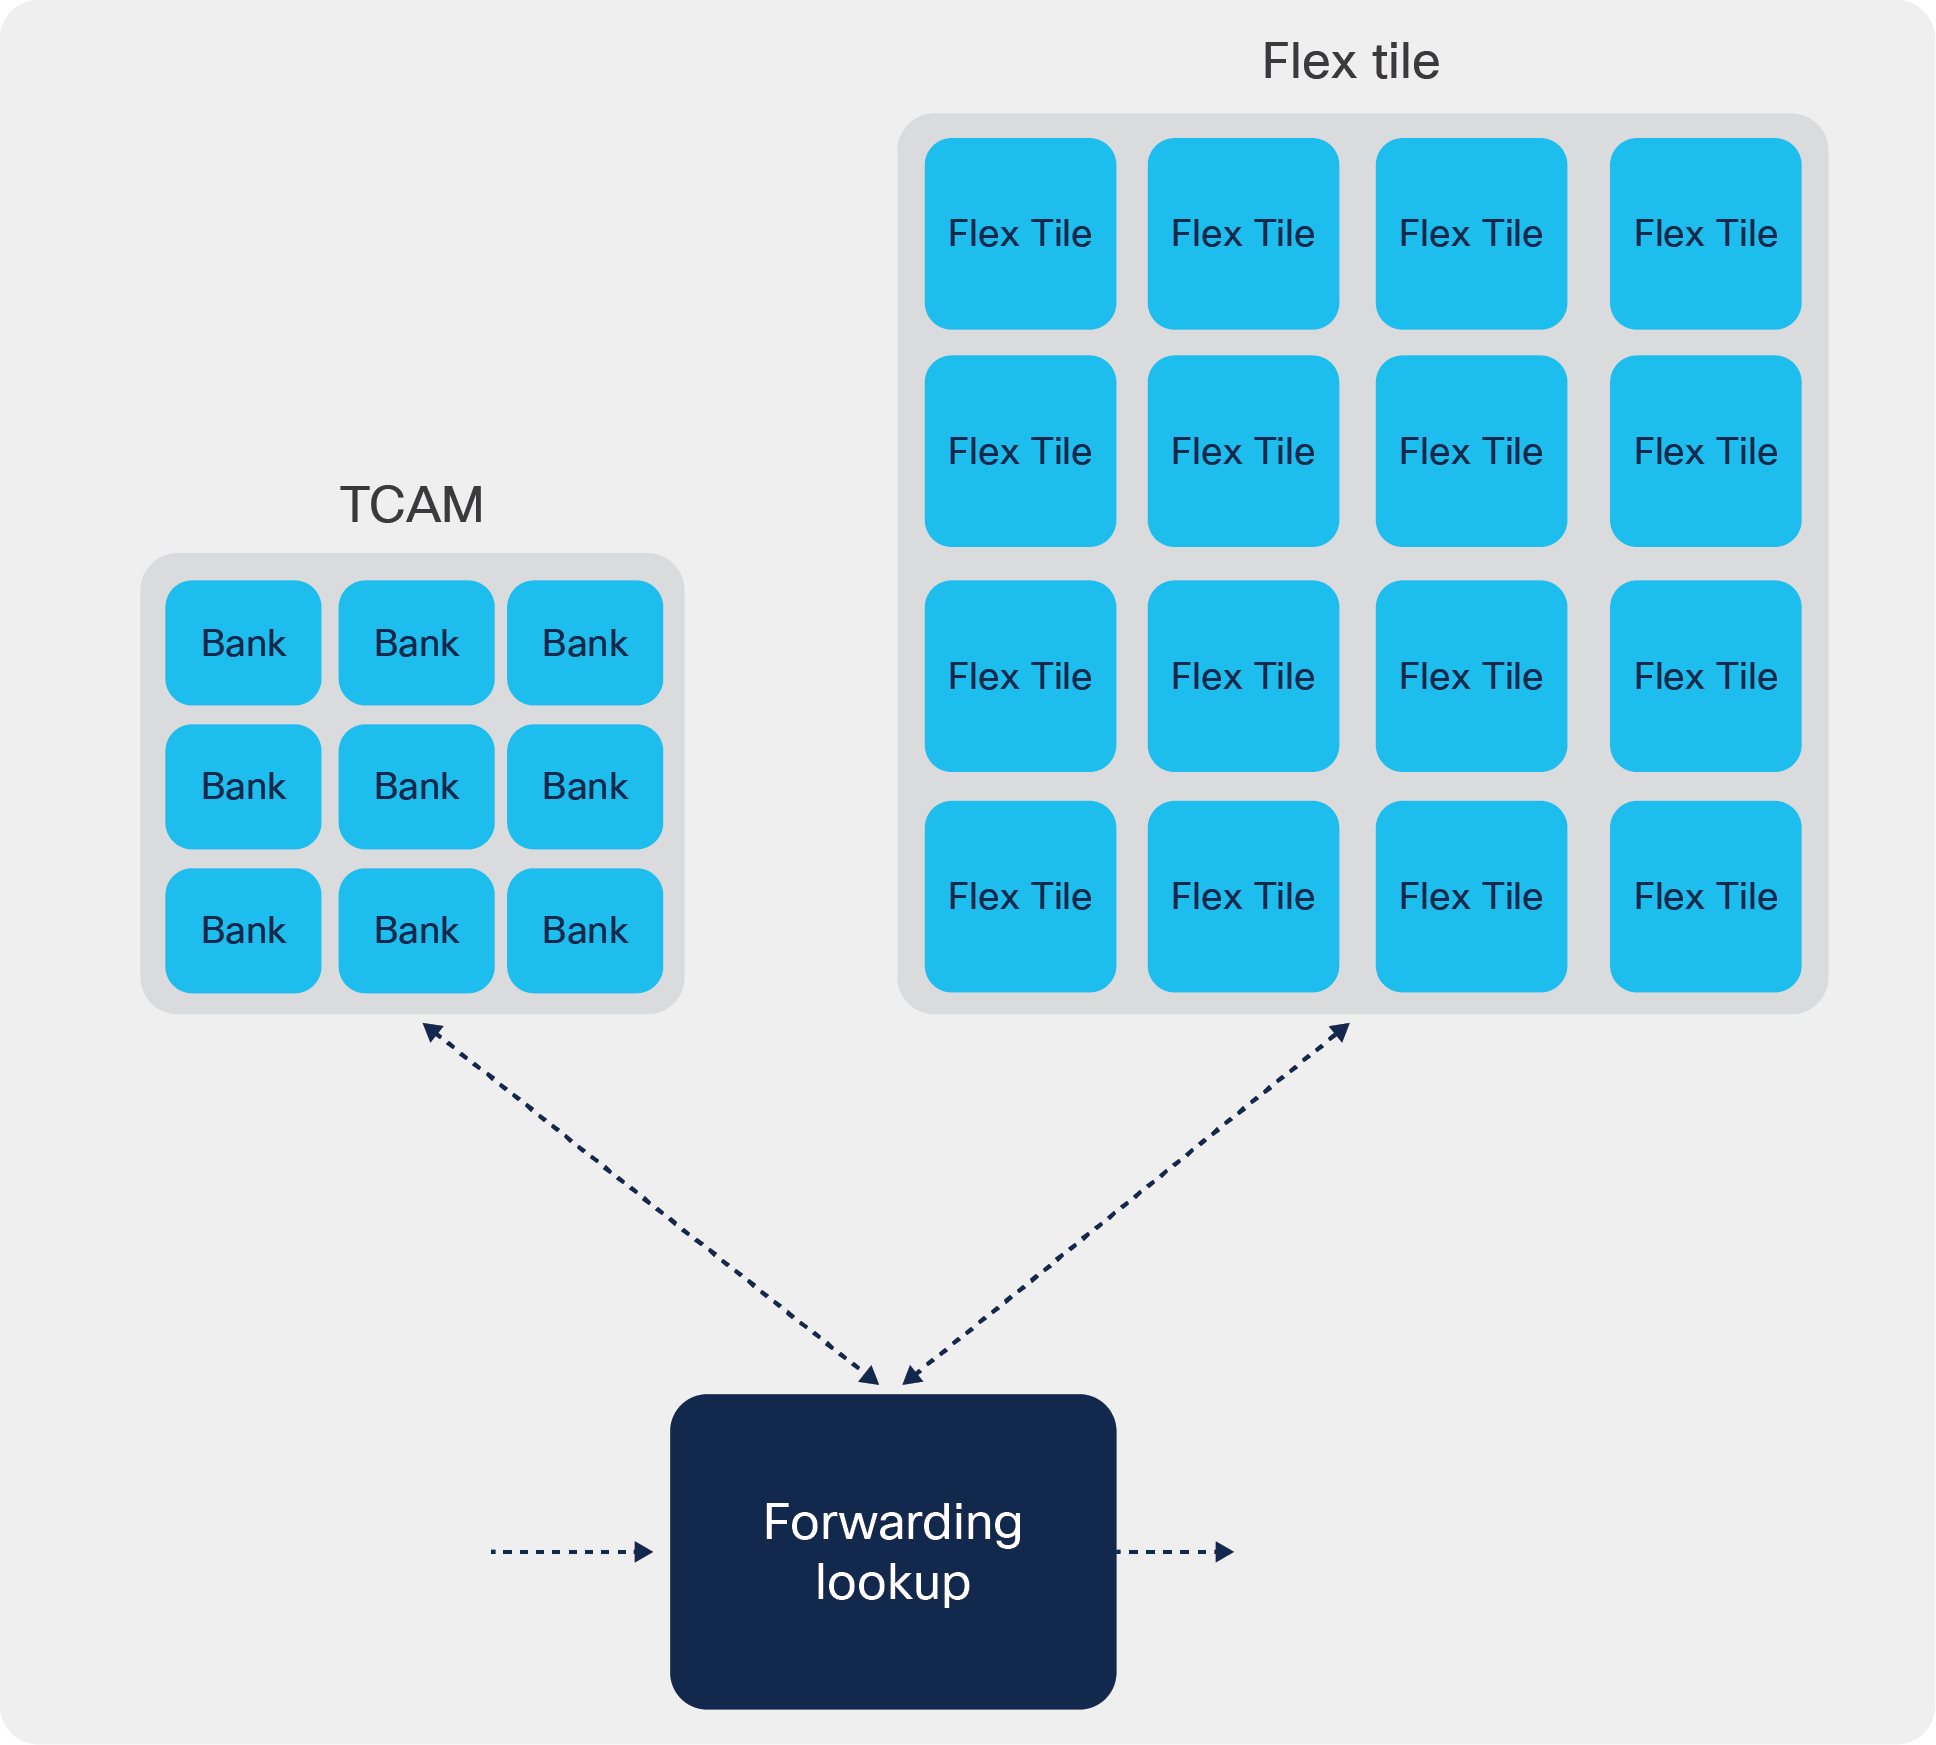 Flexible forwarding TCAM (flex tiles)